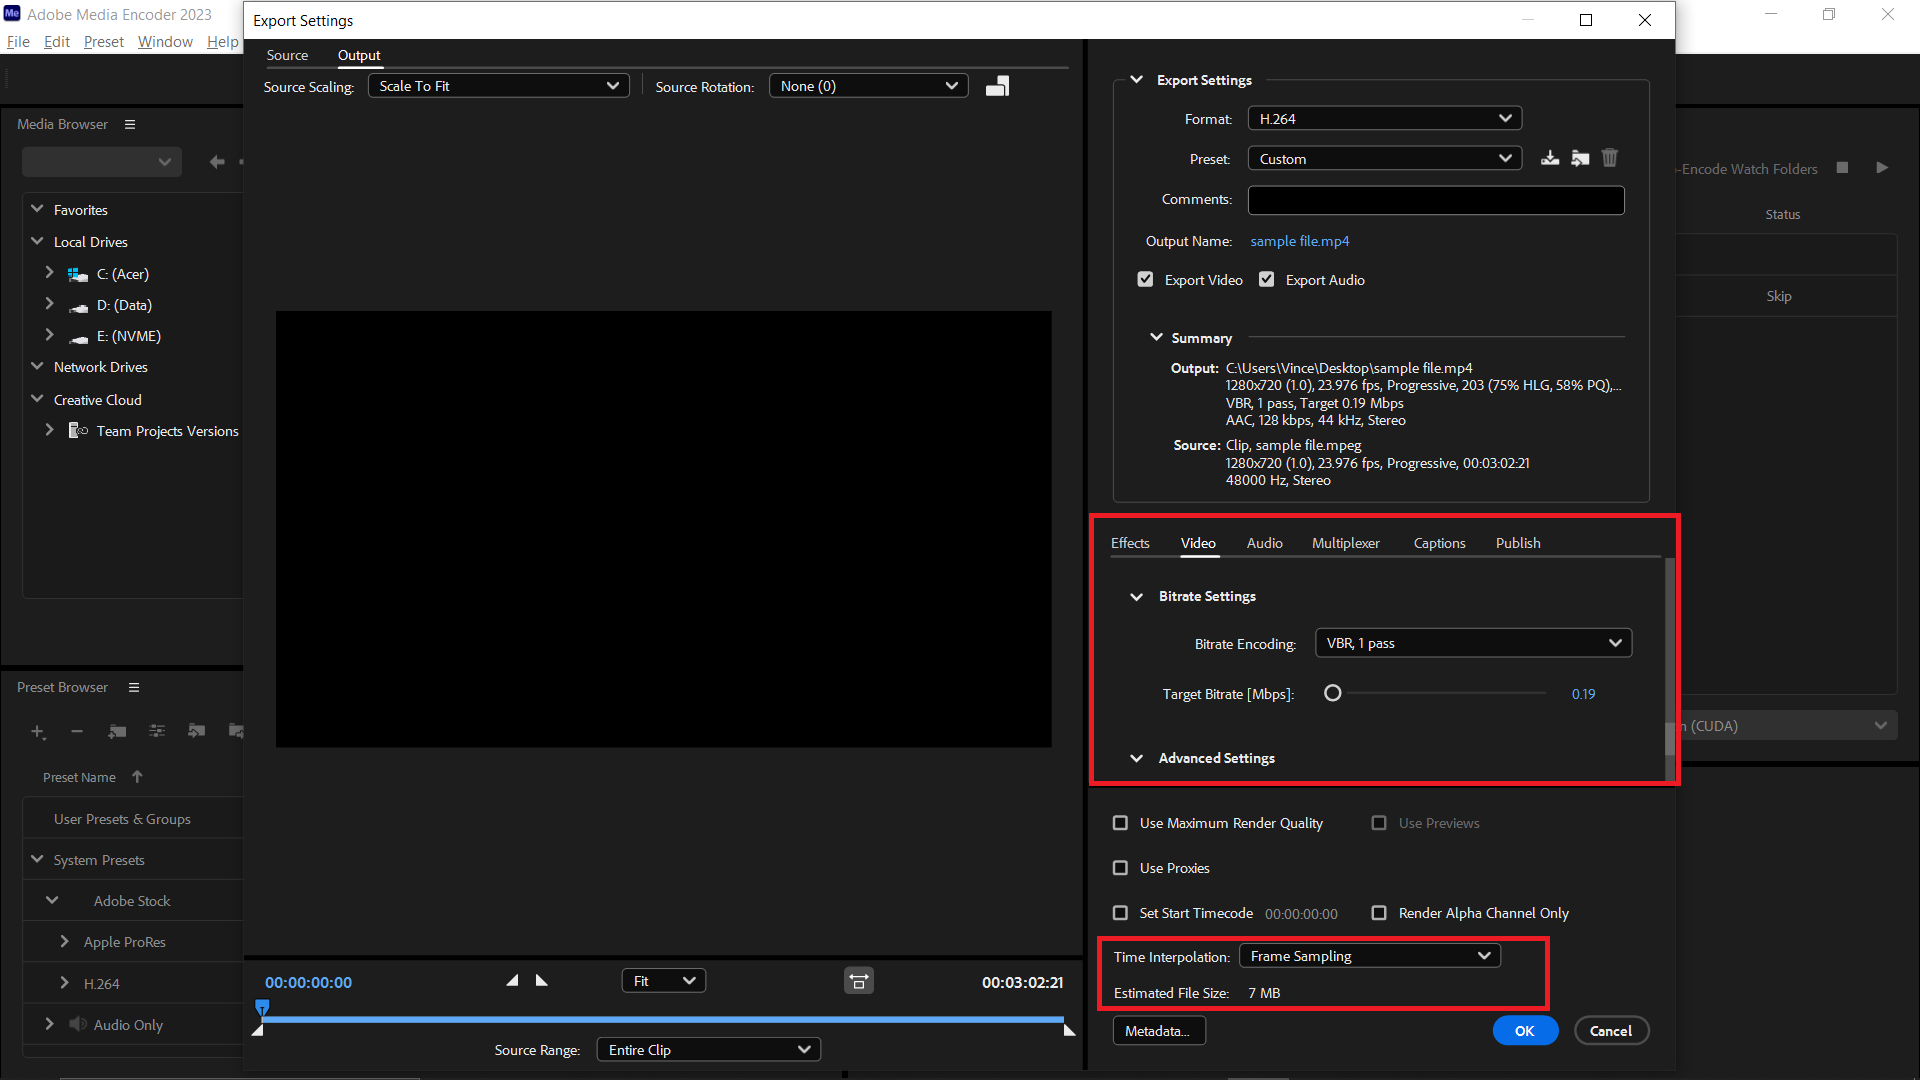 How To Use Adobe Media Encoder on Windows: Step 4